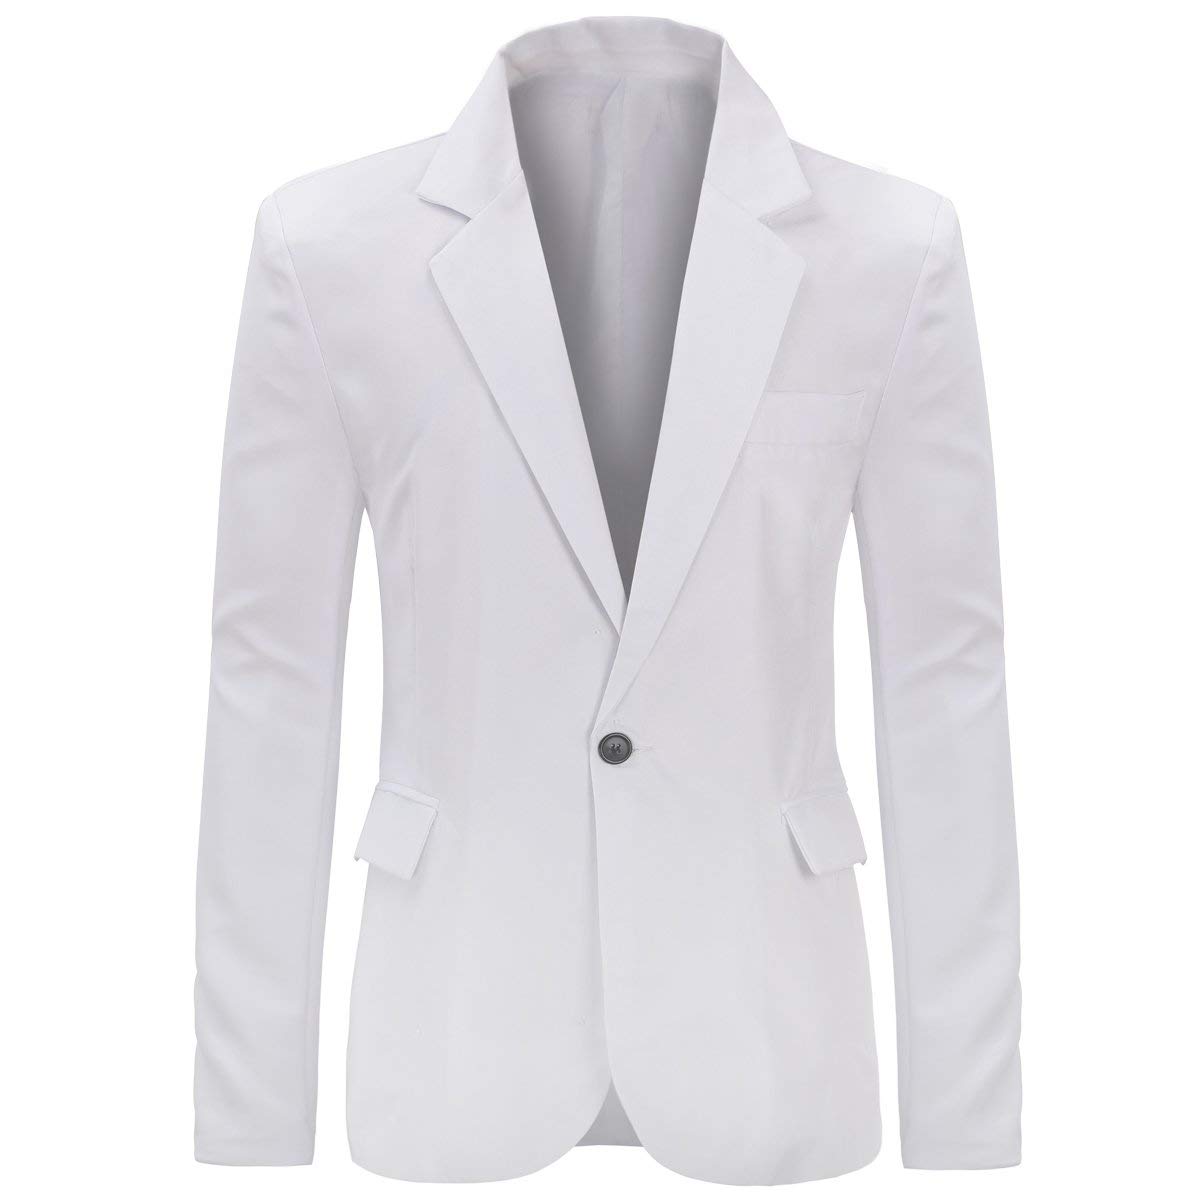 YUNCLOS Men's Slim Fit Casual One Button Notched Lapel Blazer Jacket